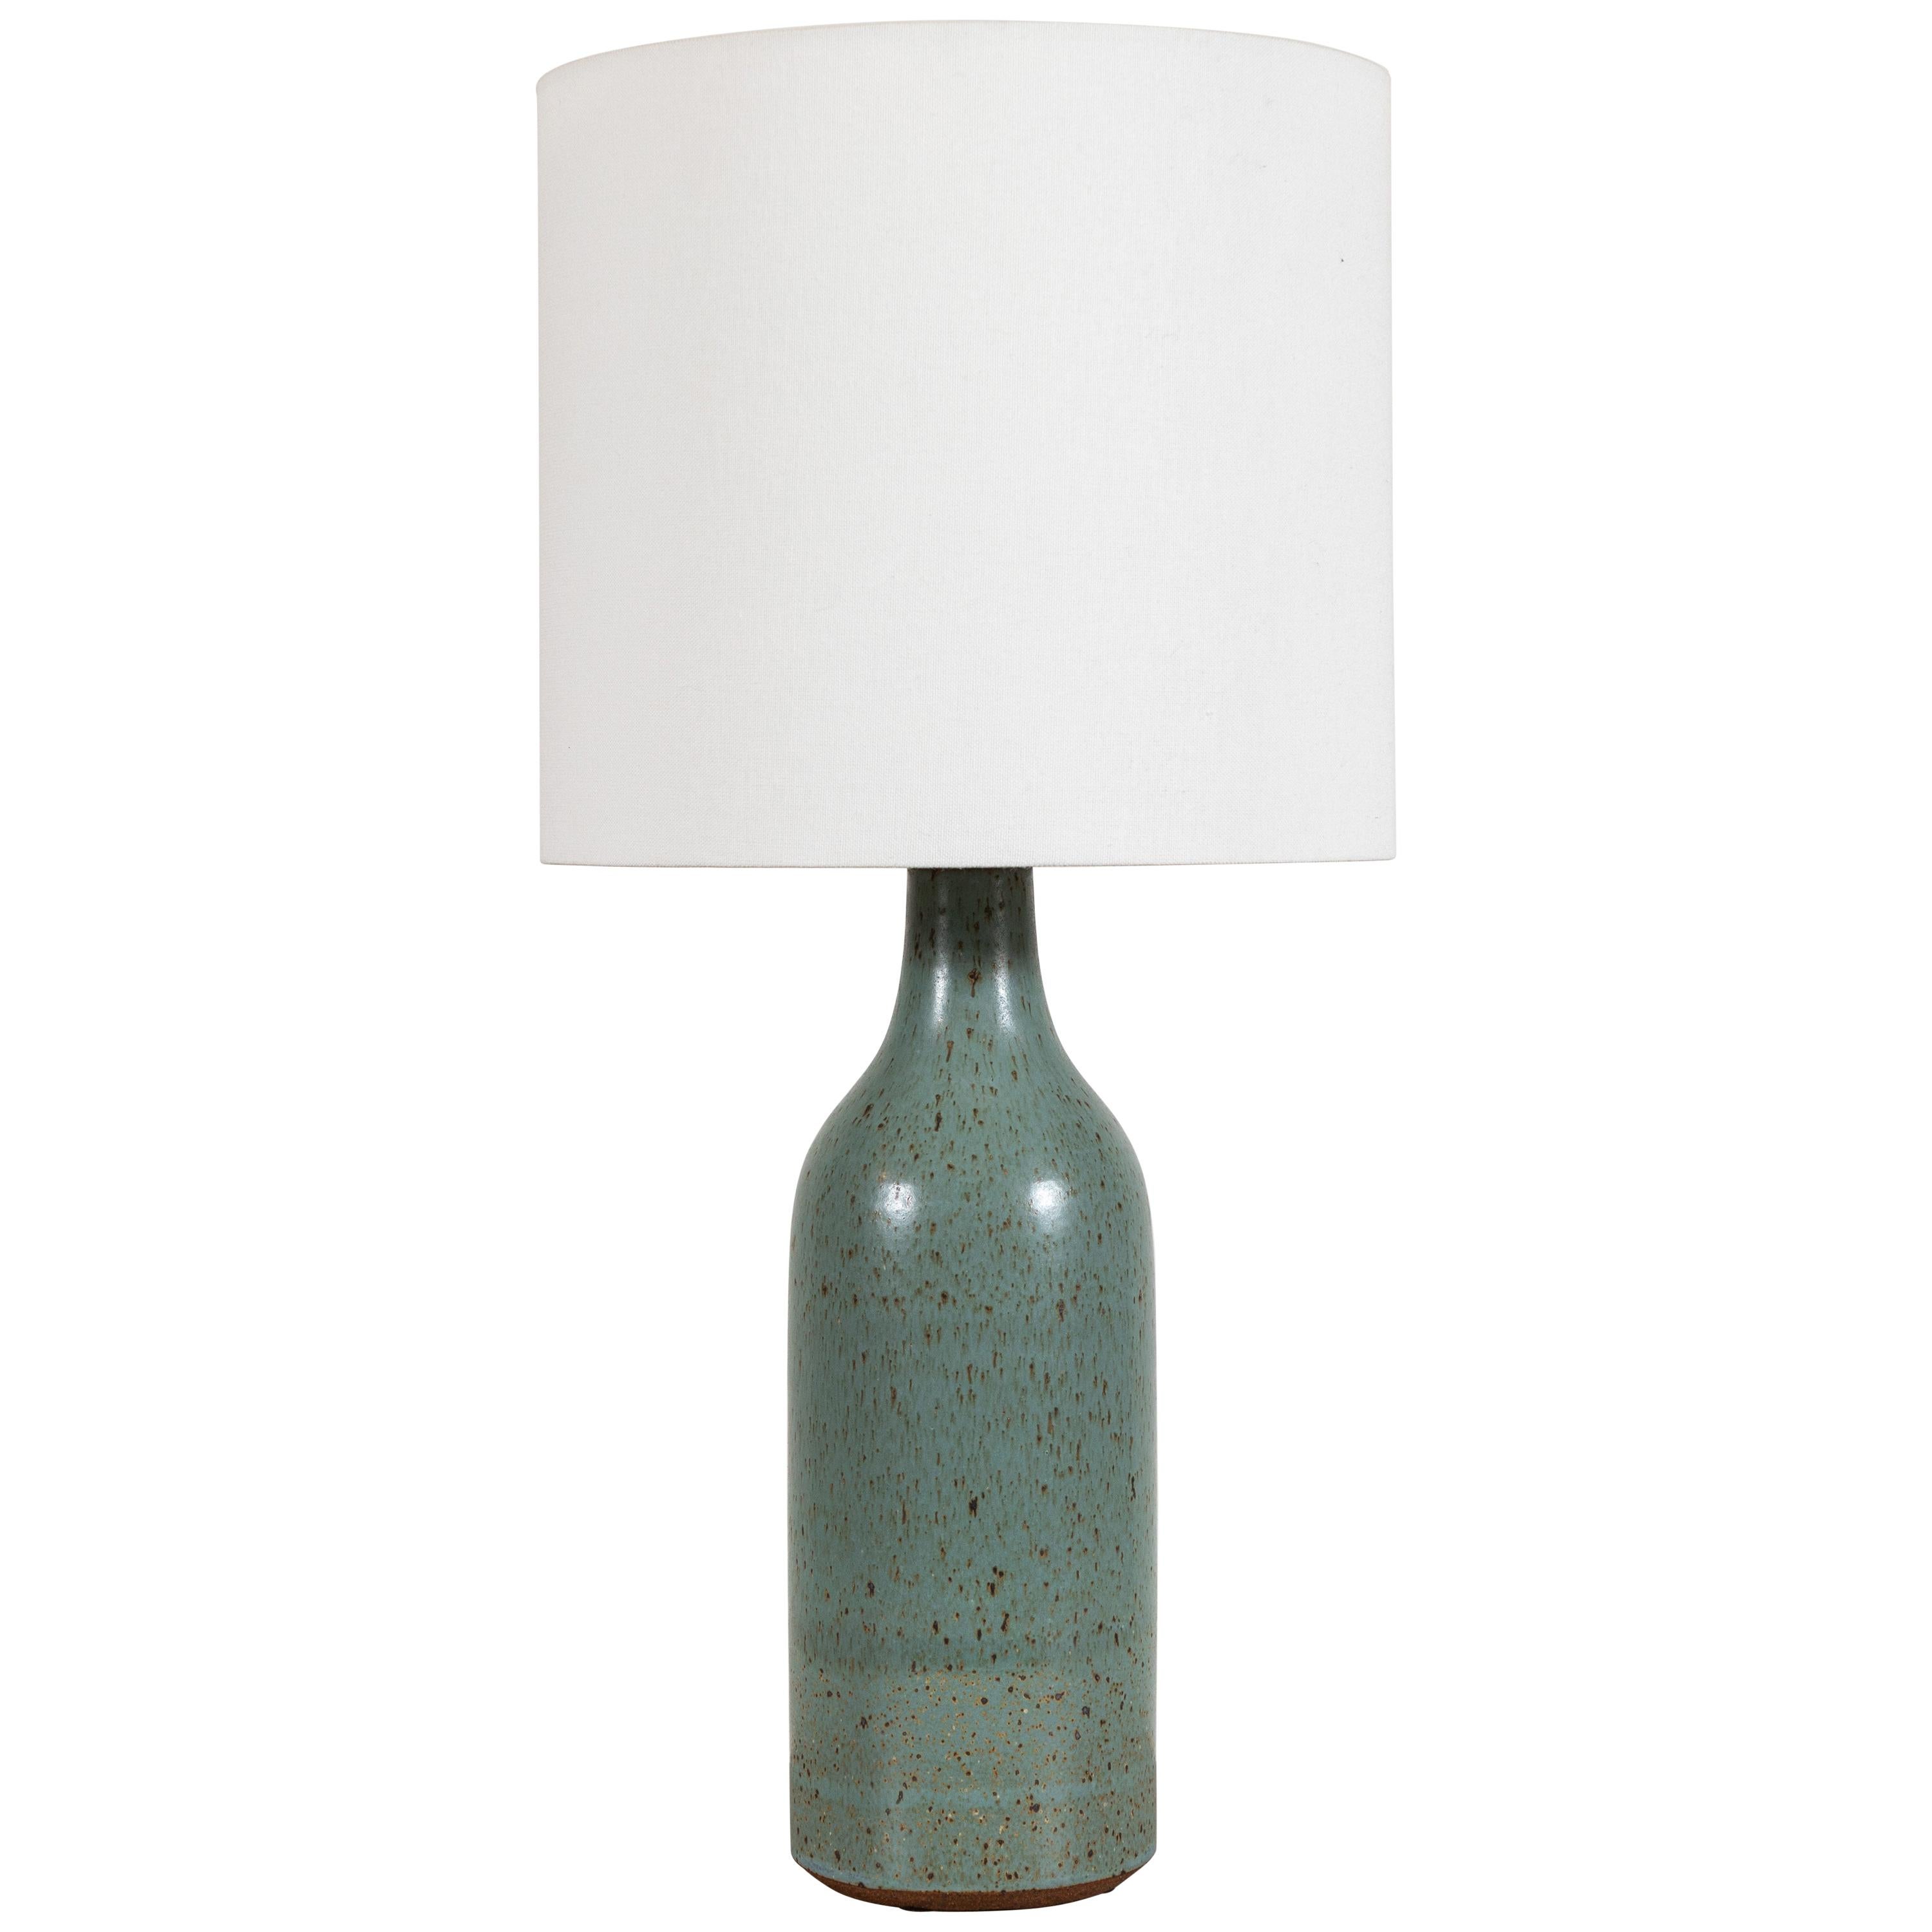 Ceramic Bottle Lamp by Victoria Morris